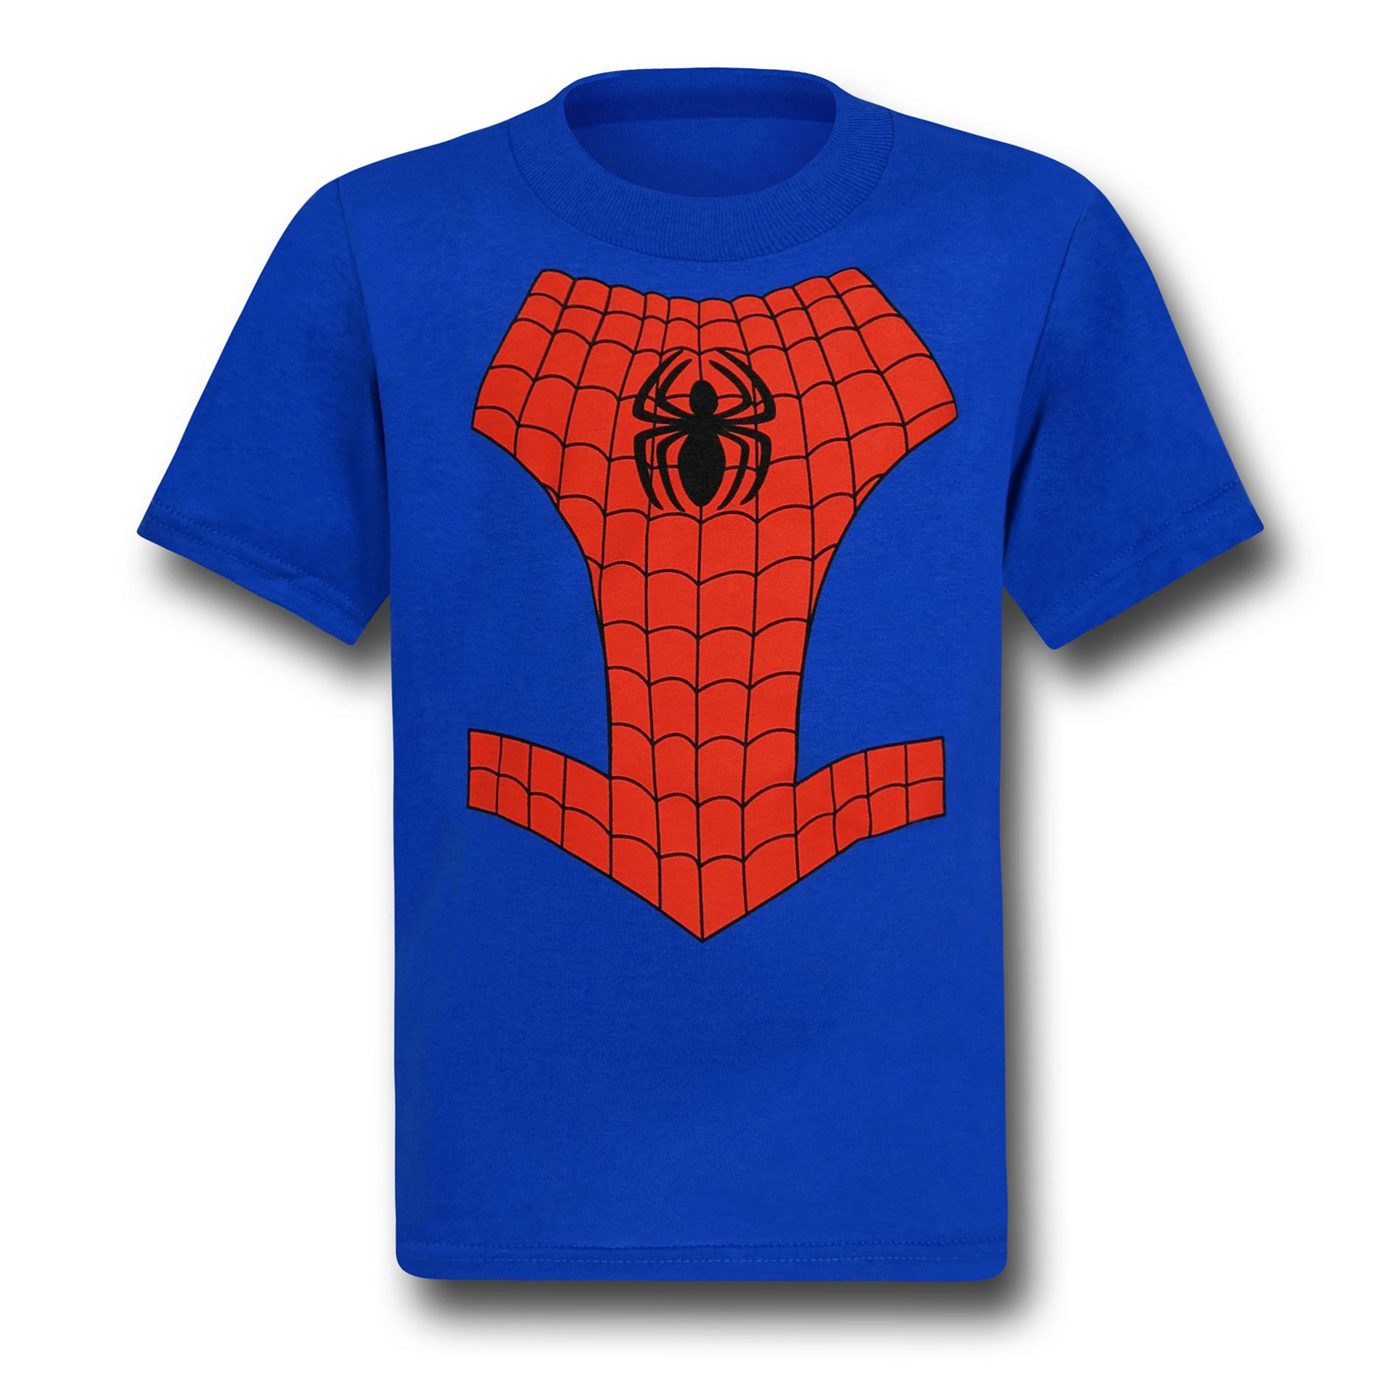 Spiderman Kids Logo Costume T-Shirt